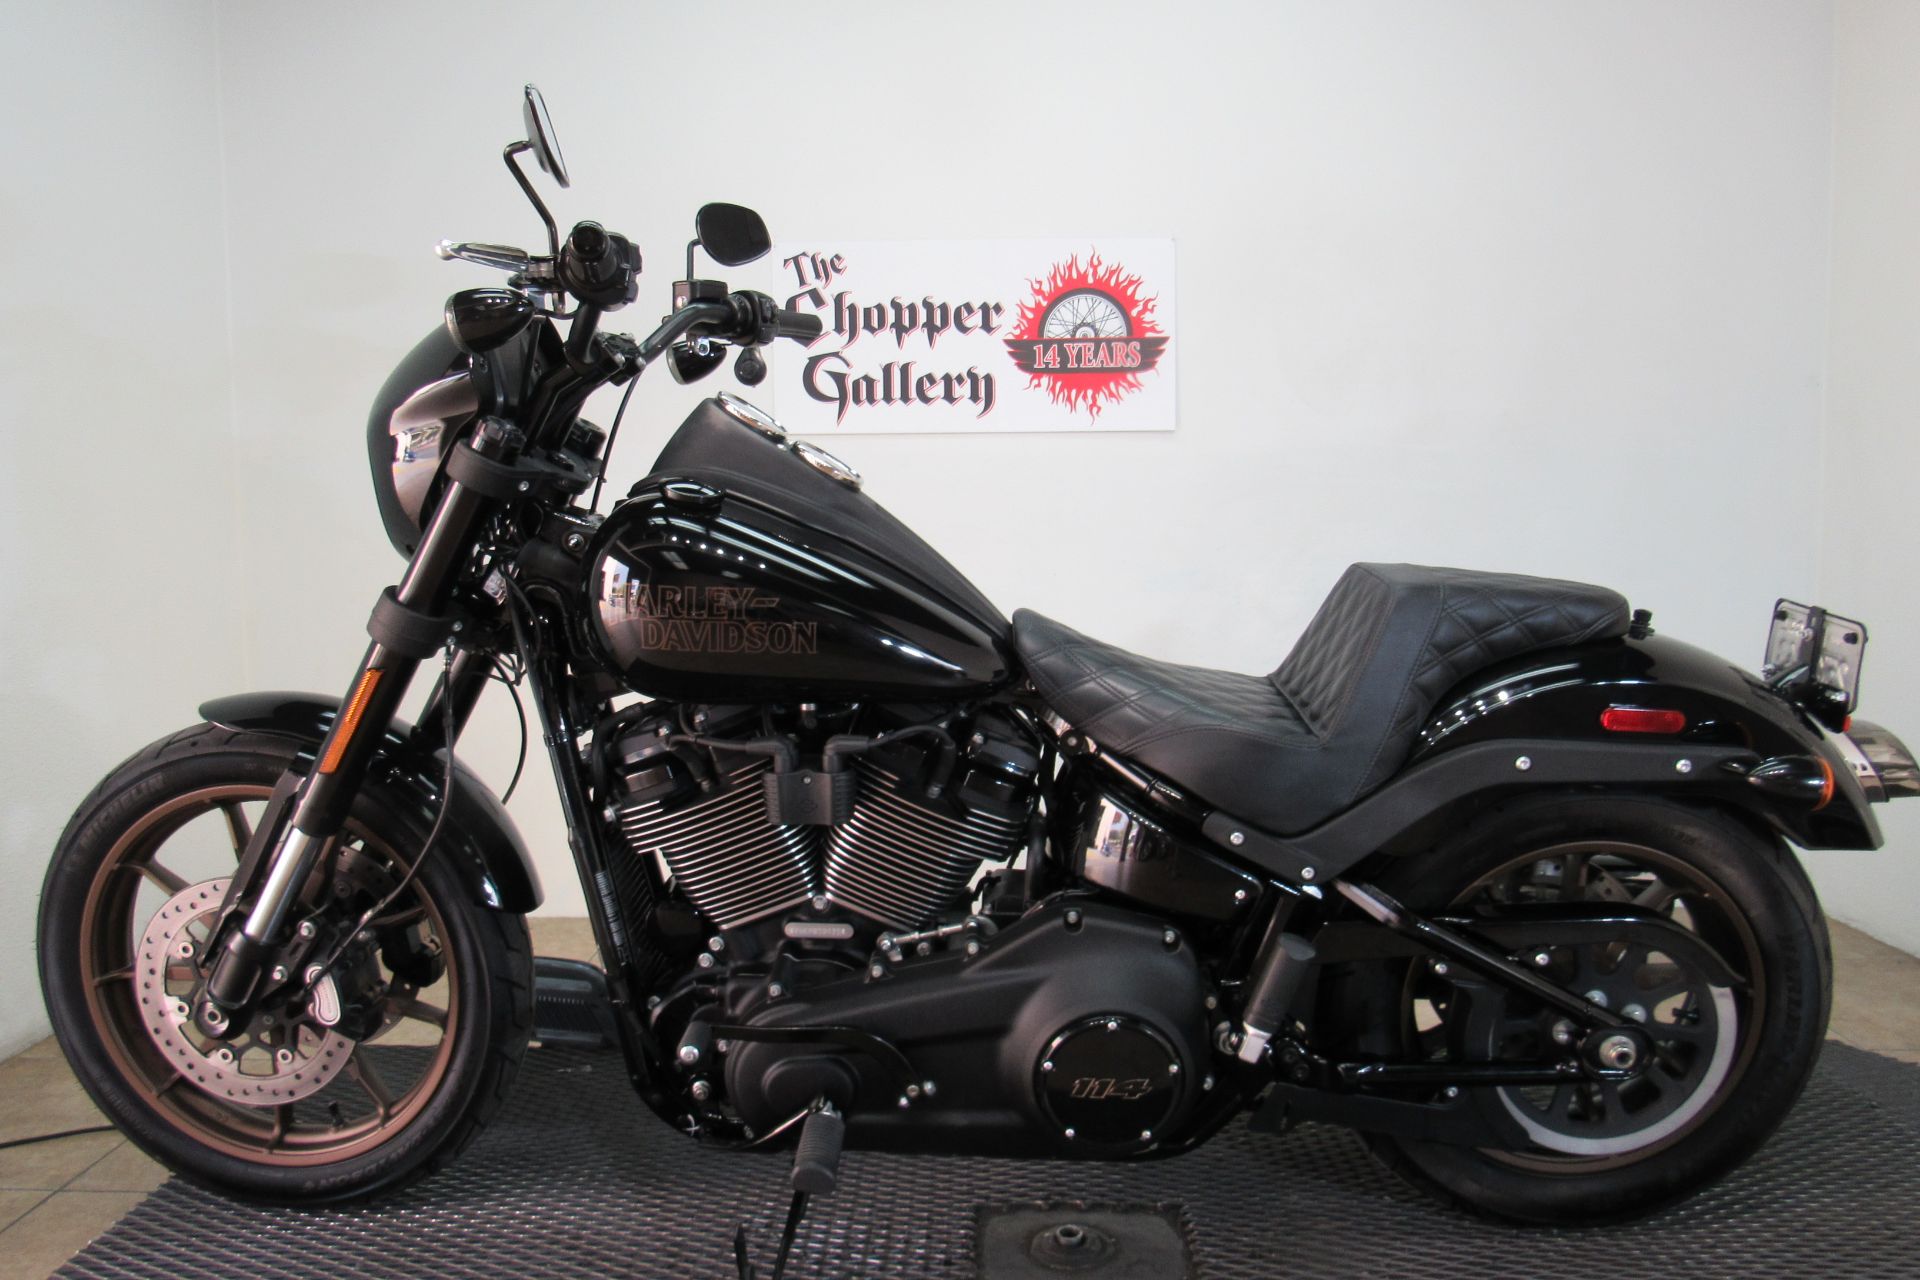 2021 Harley-Davidson Low Rider®S in Temecula, California - Photo 2